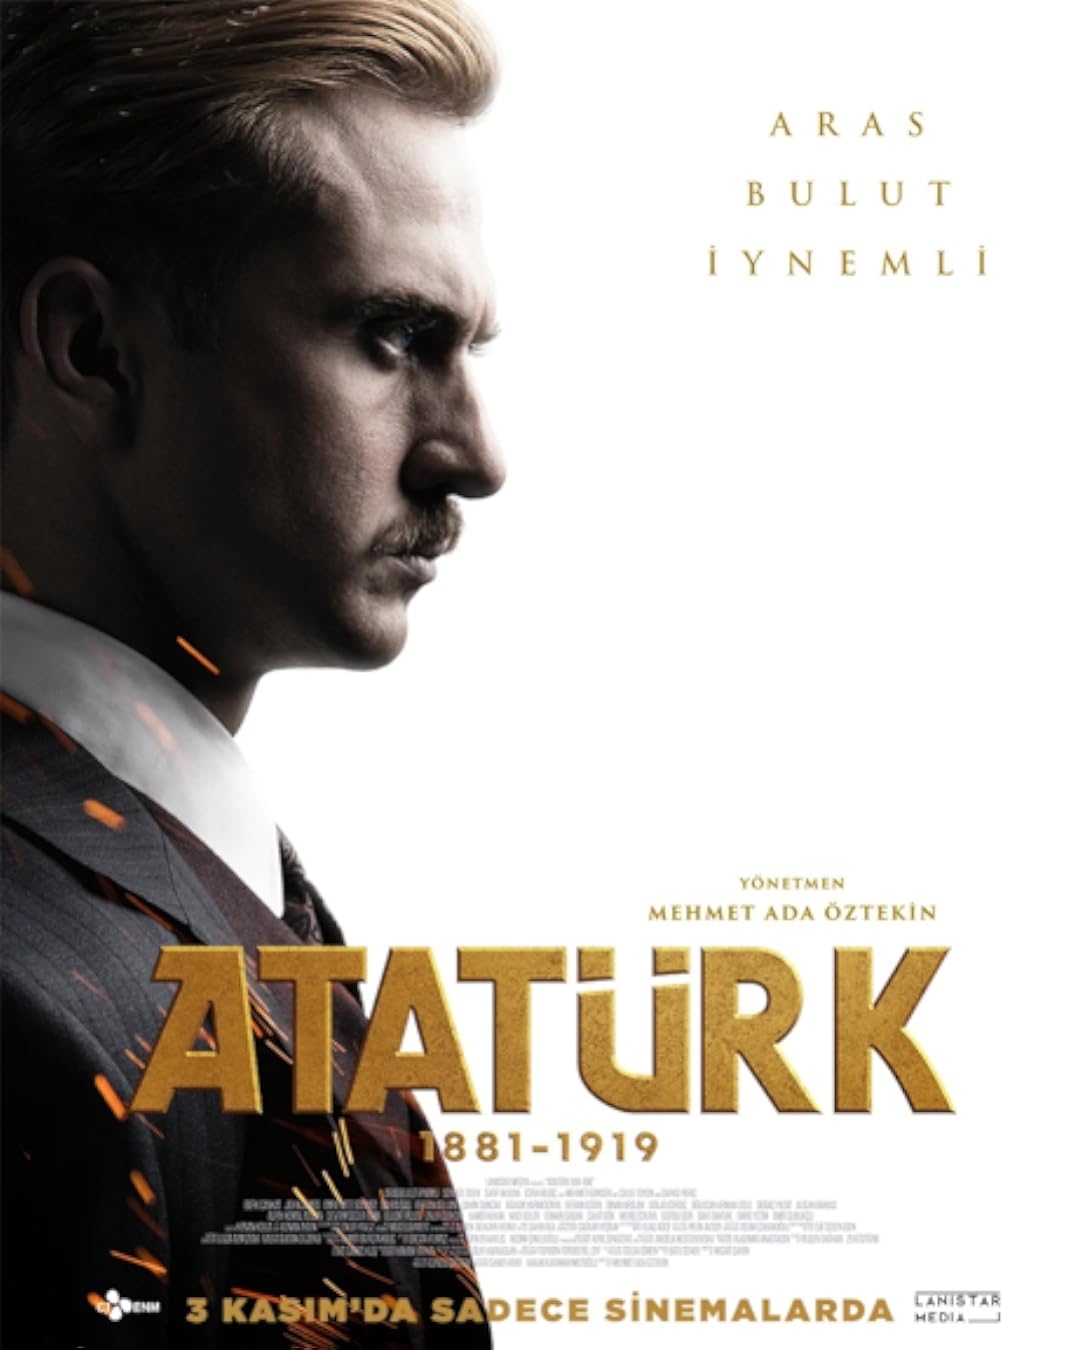 Ataturk-poster.jpg